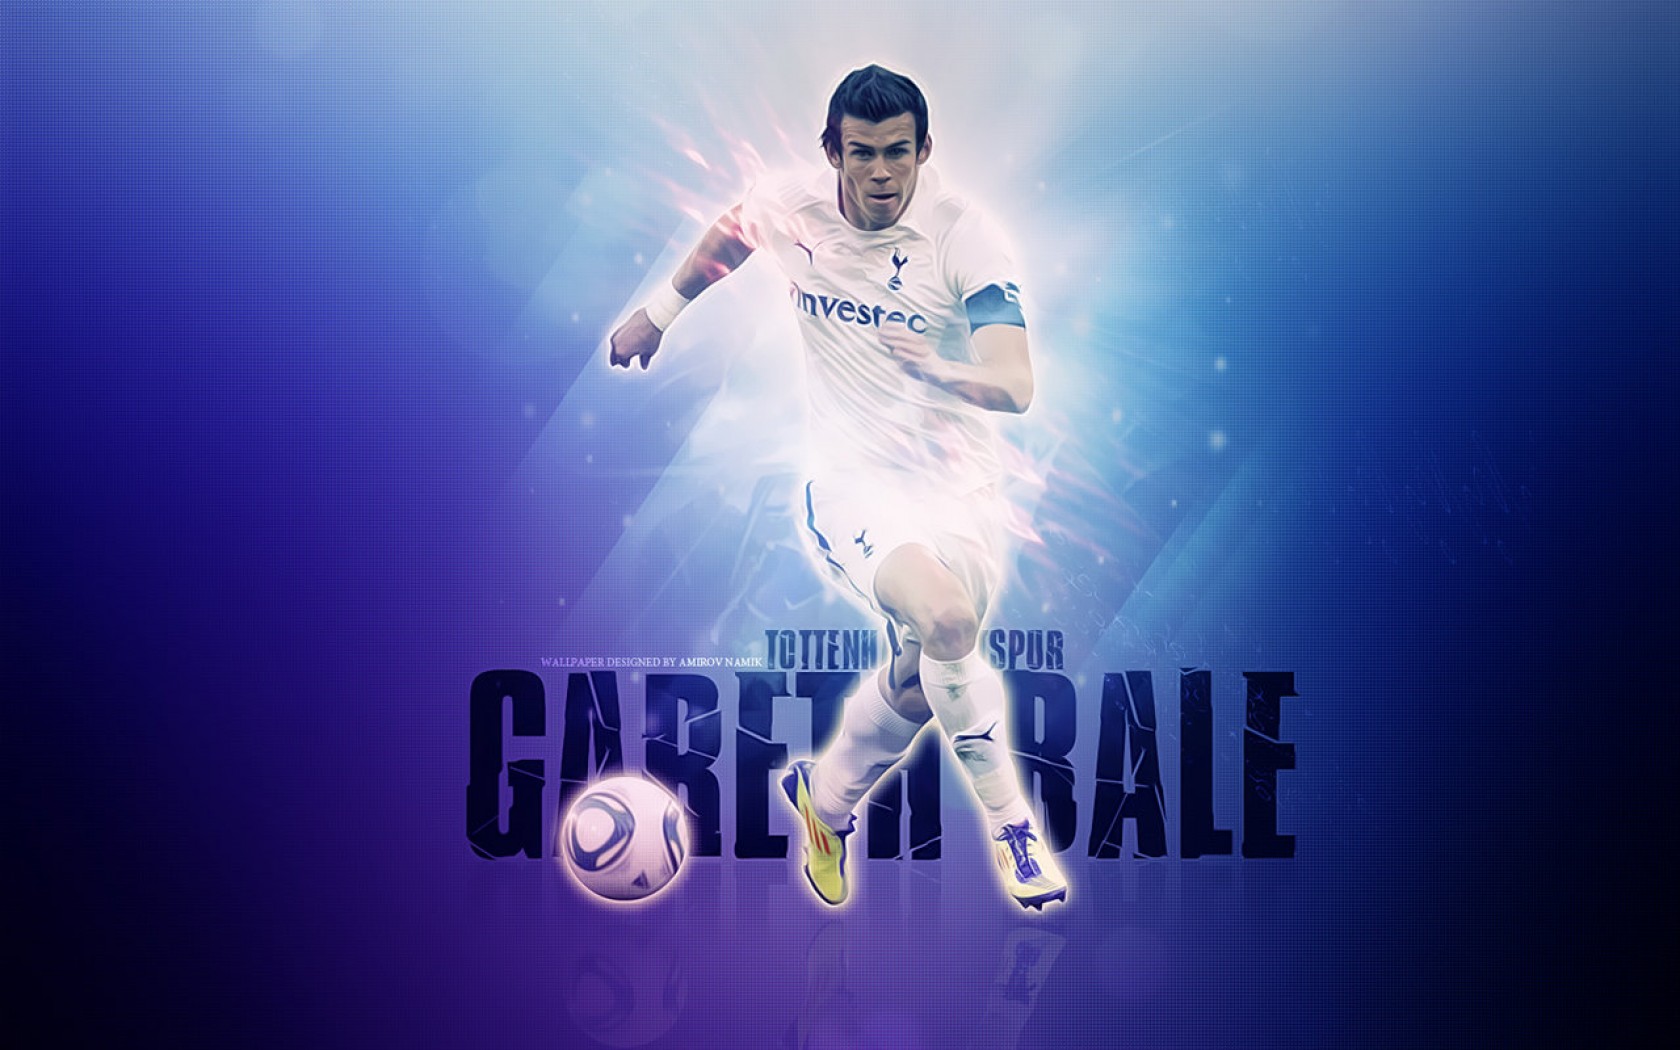 Gareth Bale HD Wallpaper Football